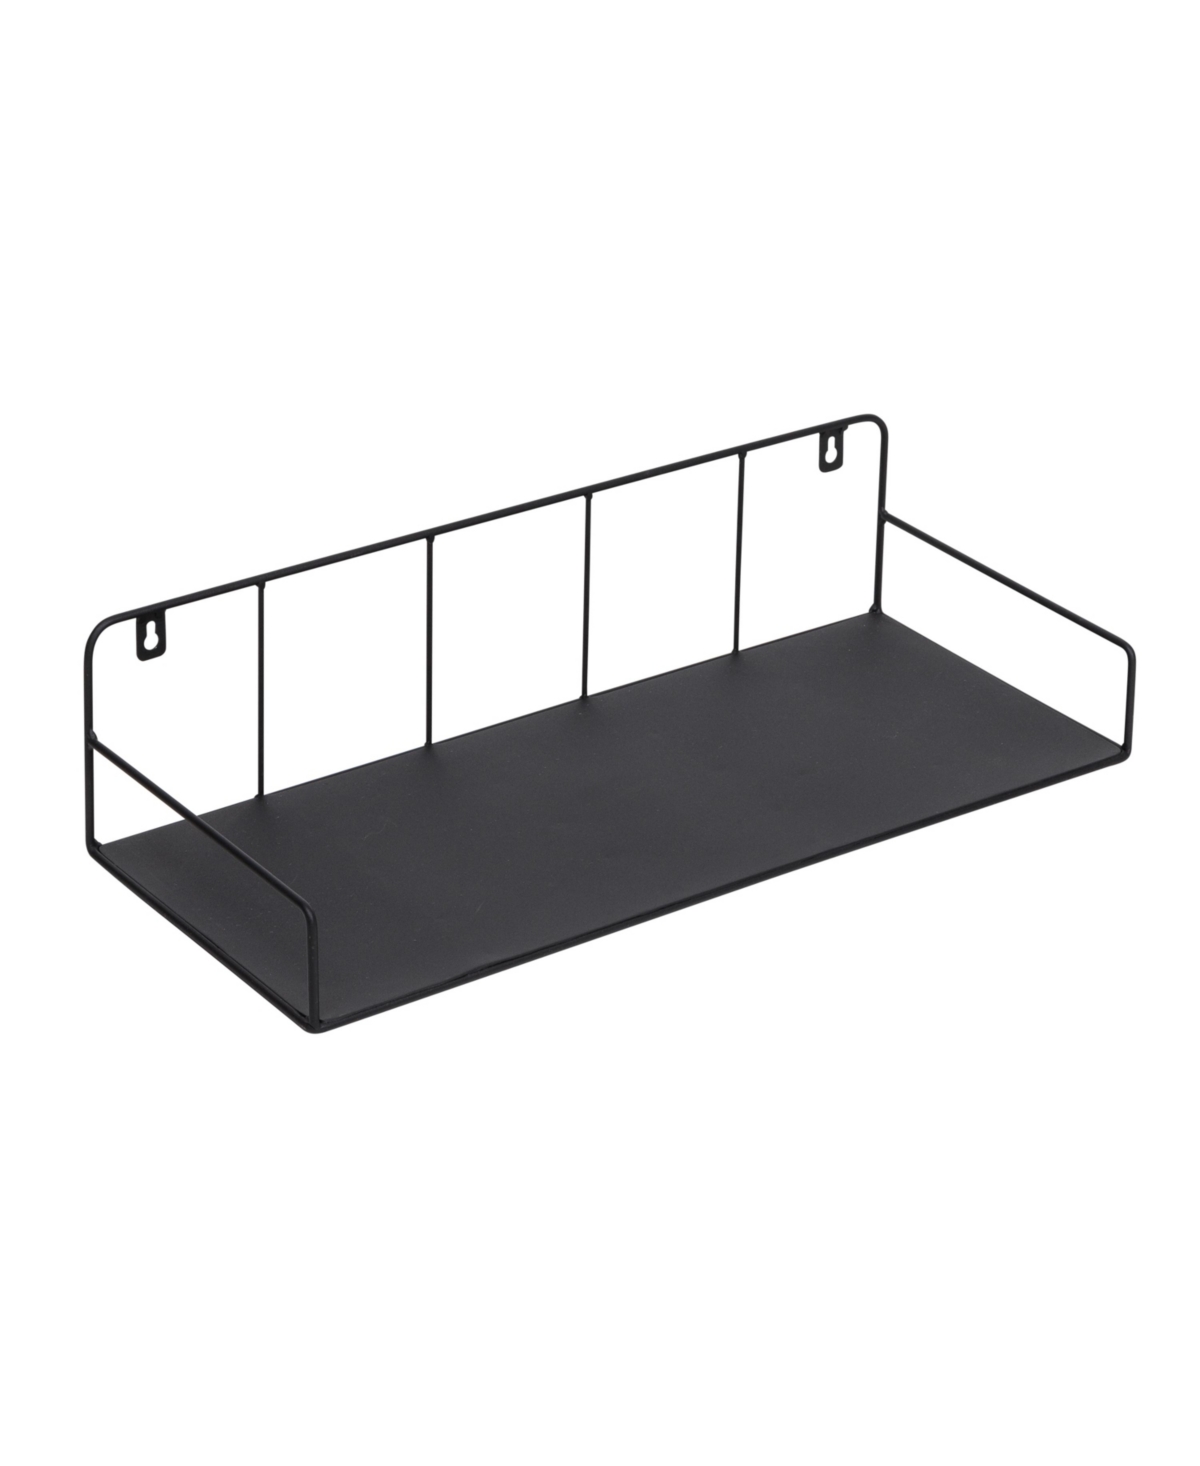 Curved Metal Floating Wall Shelf - Black